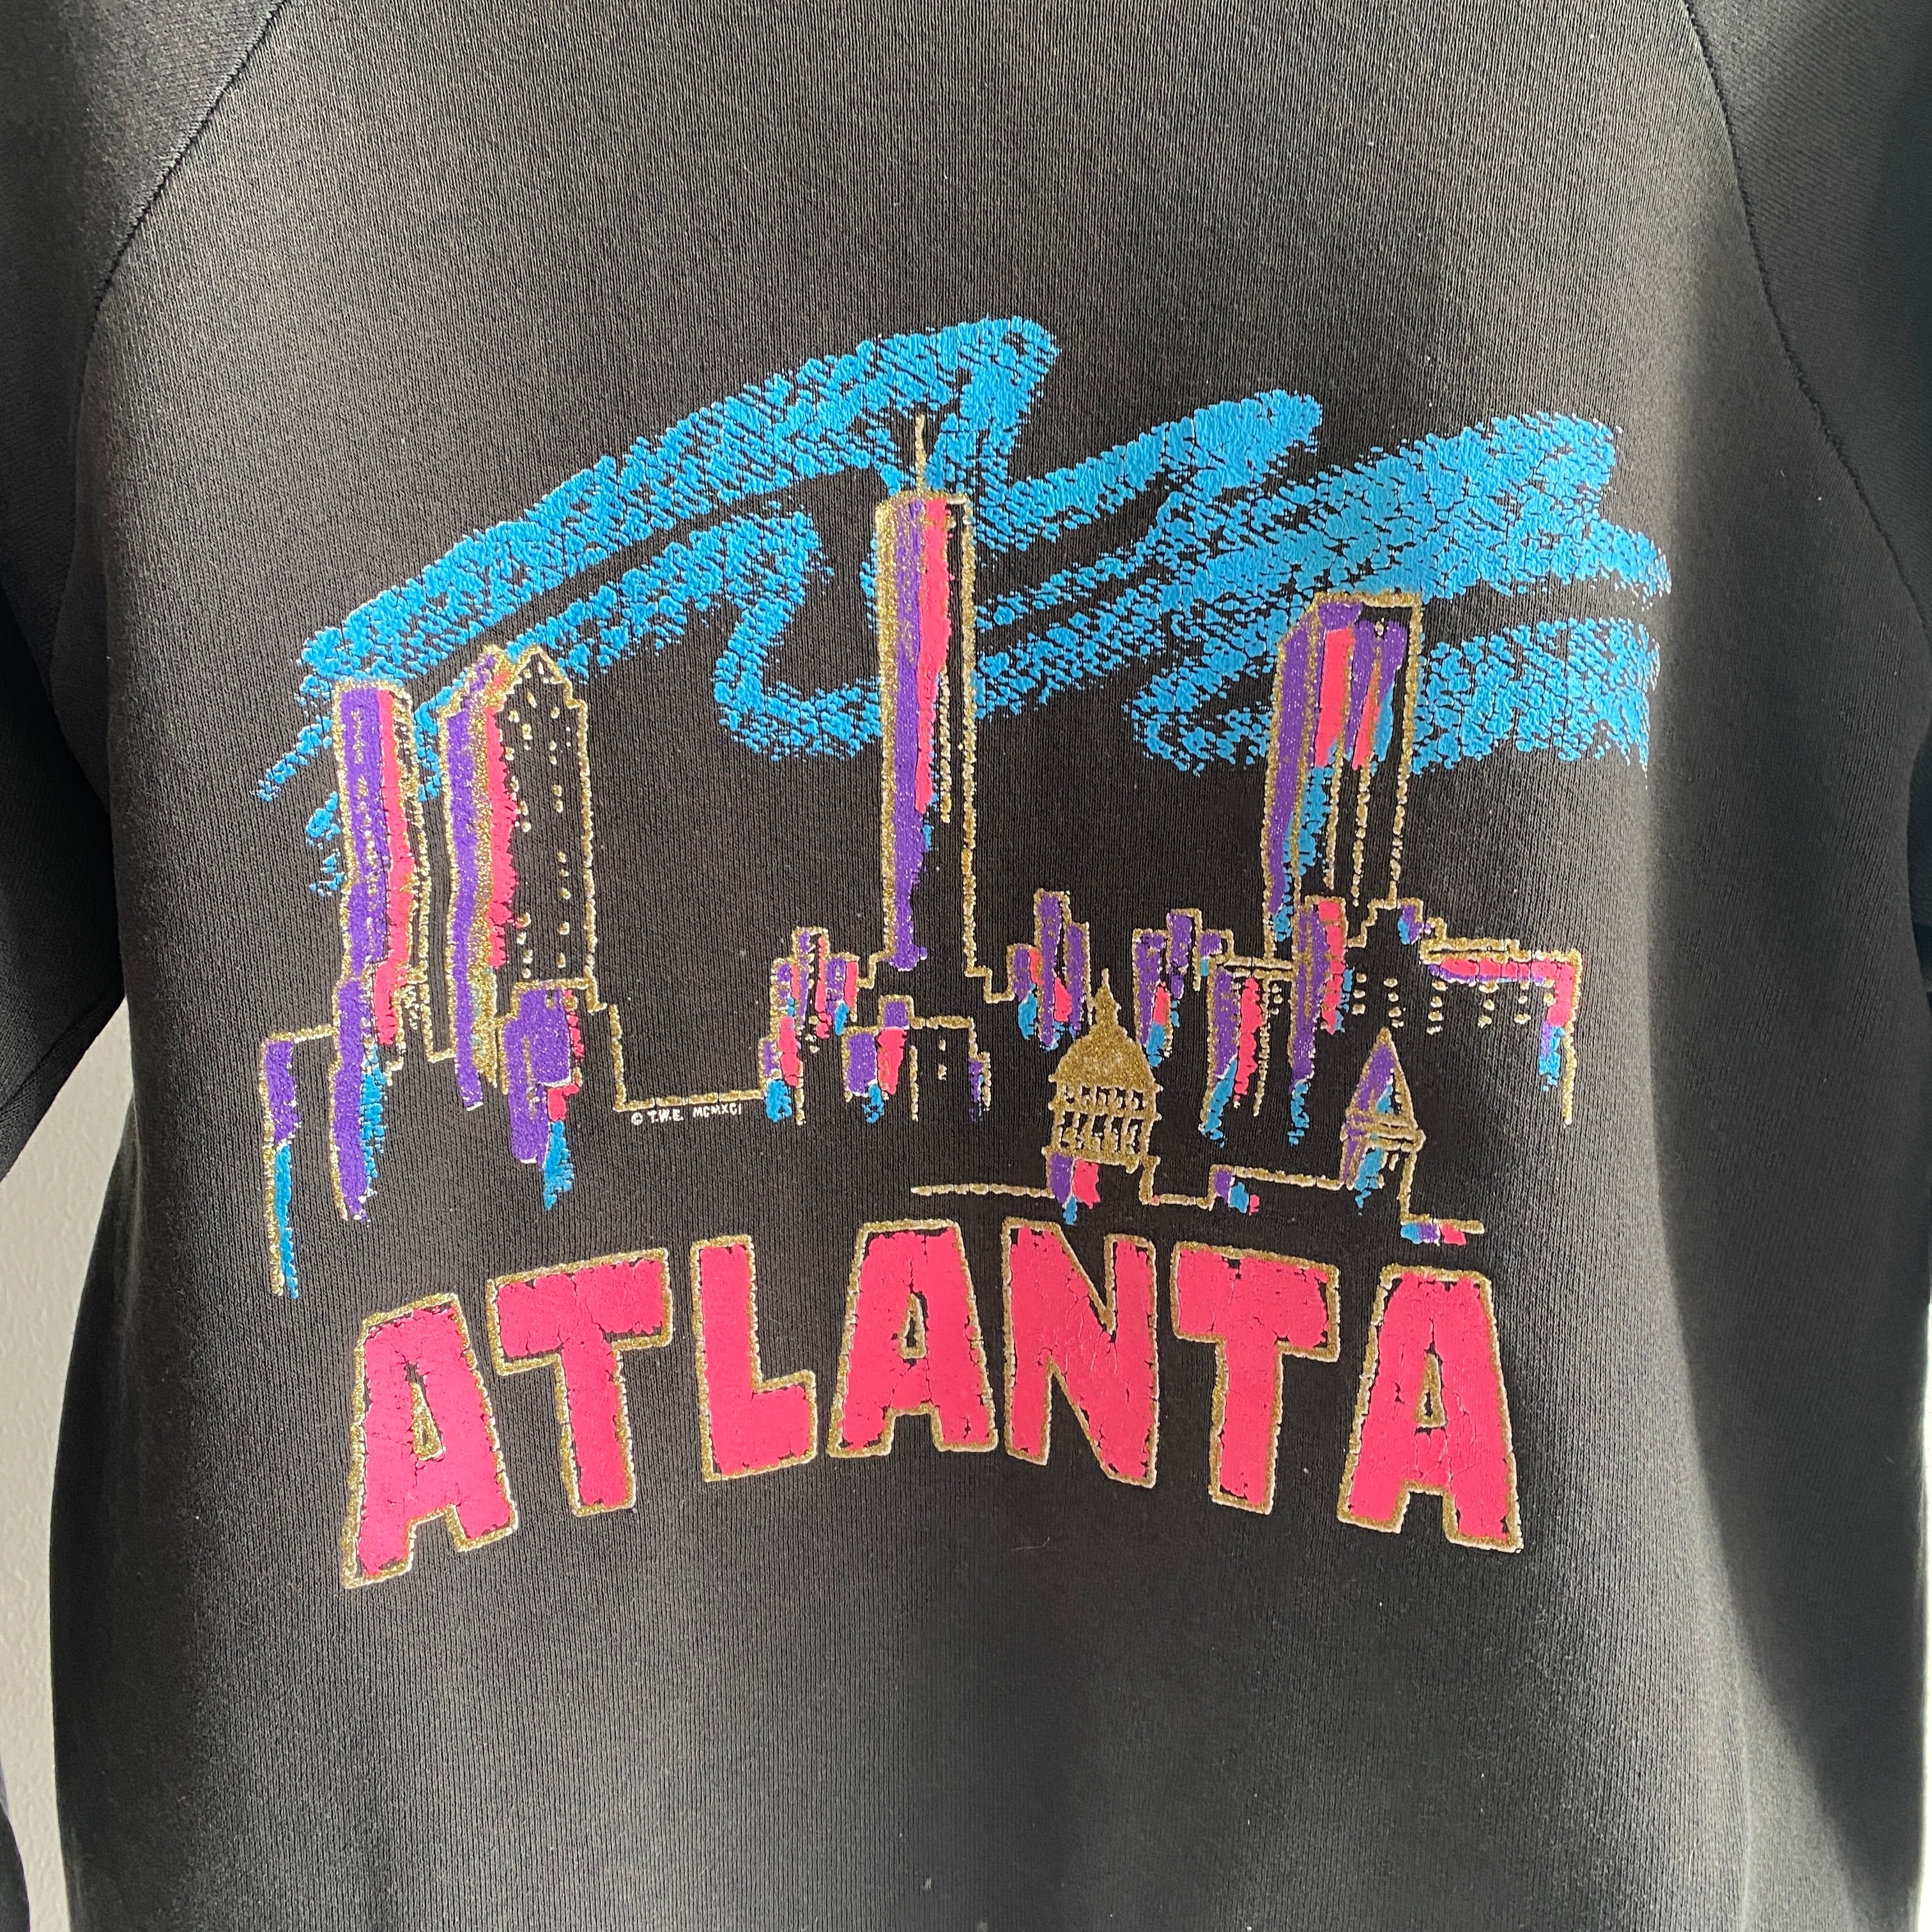 1991 Atlanta Tourist Sweatshirt by FOTL